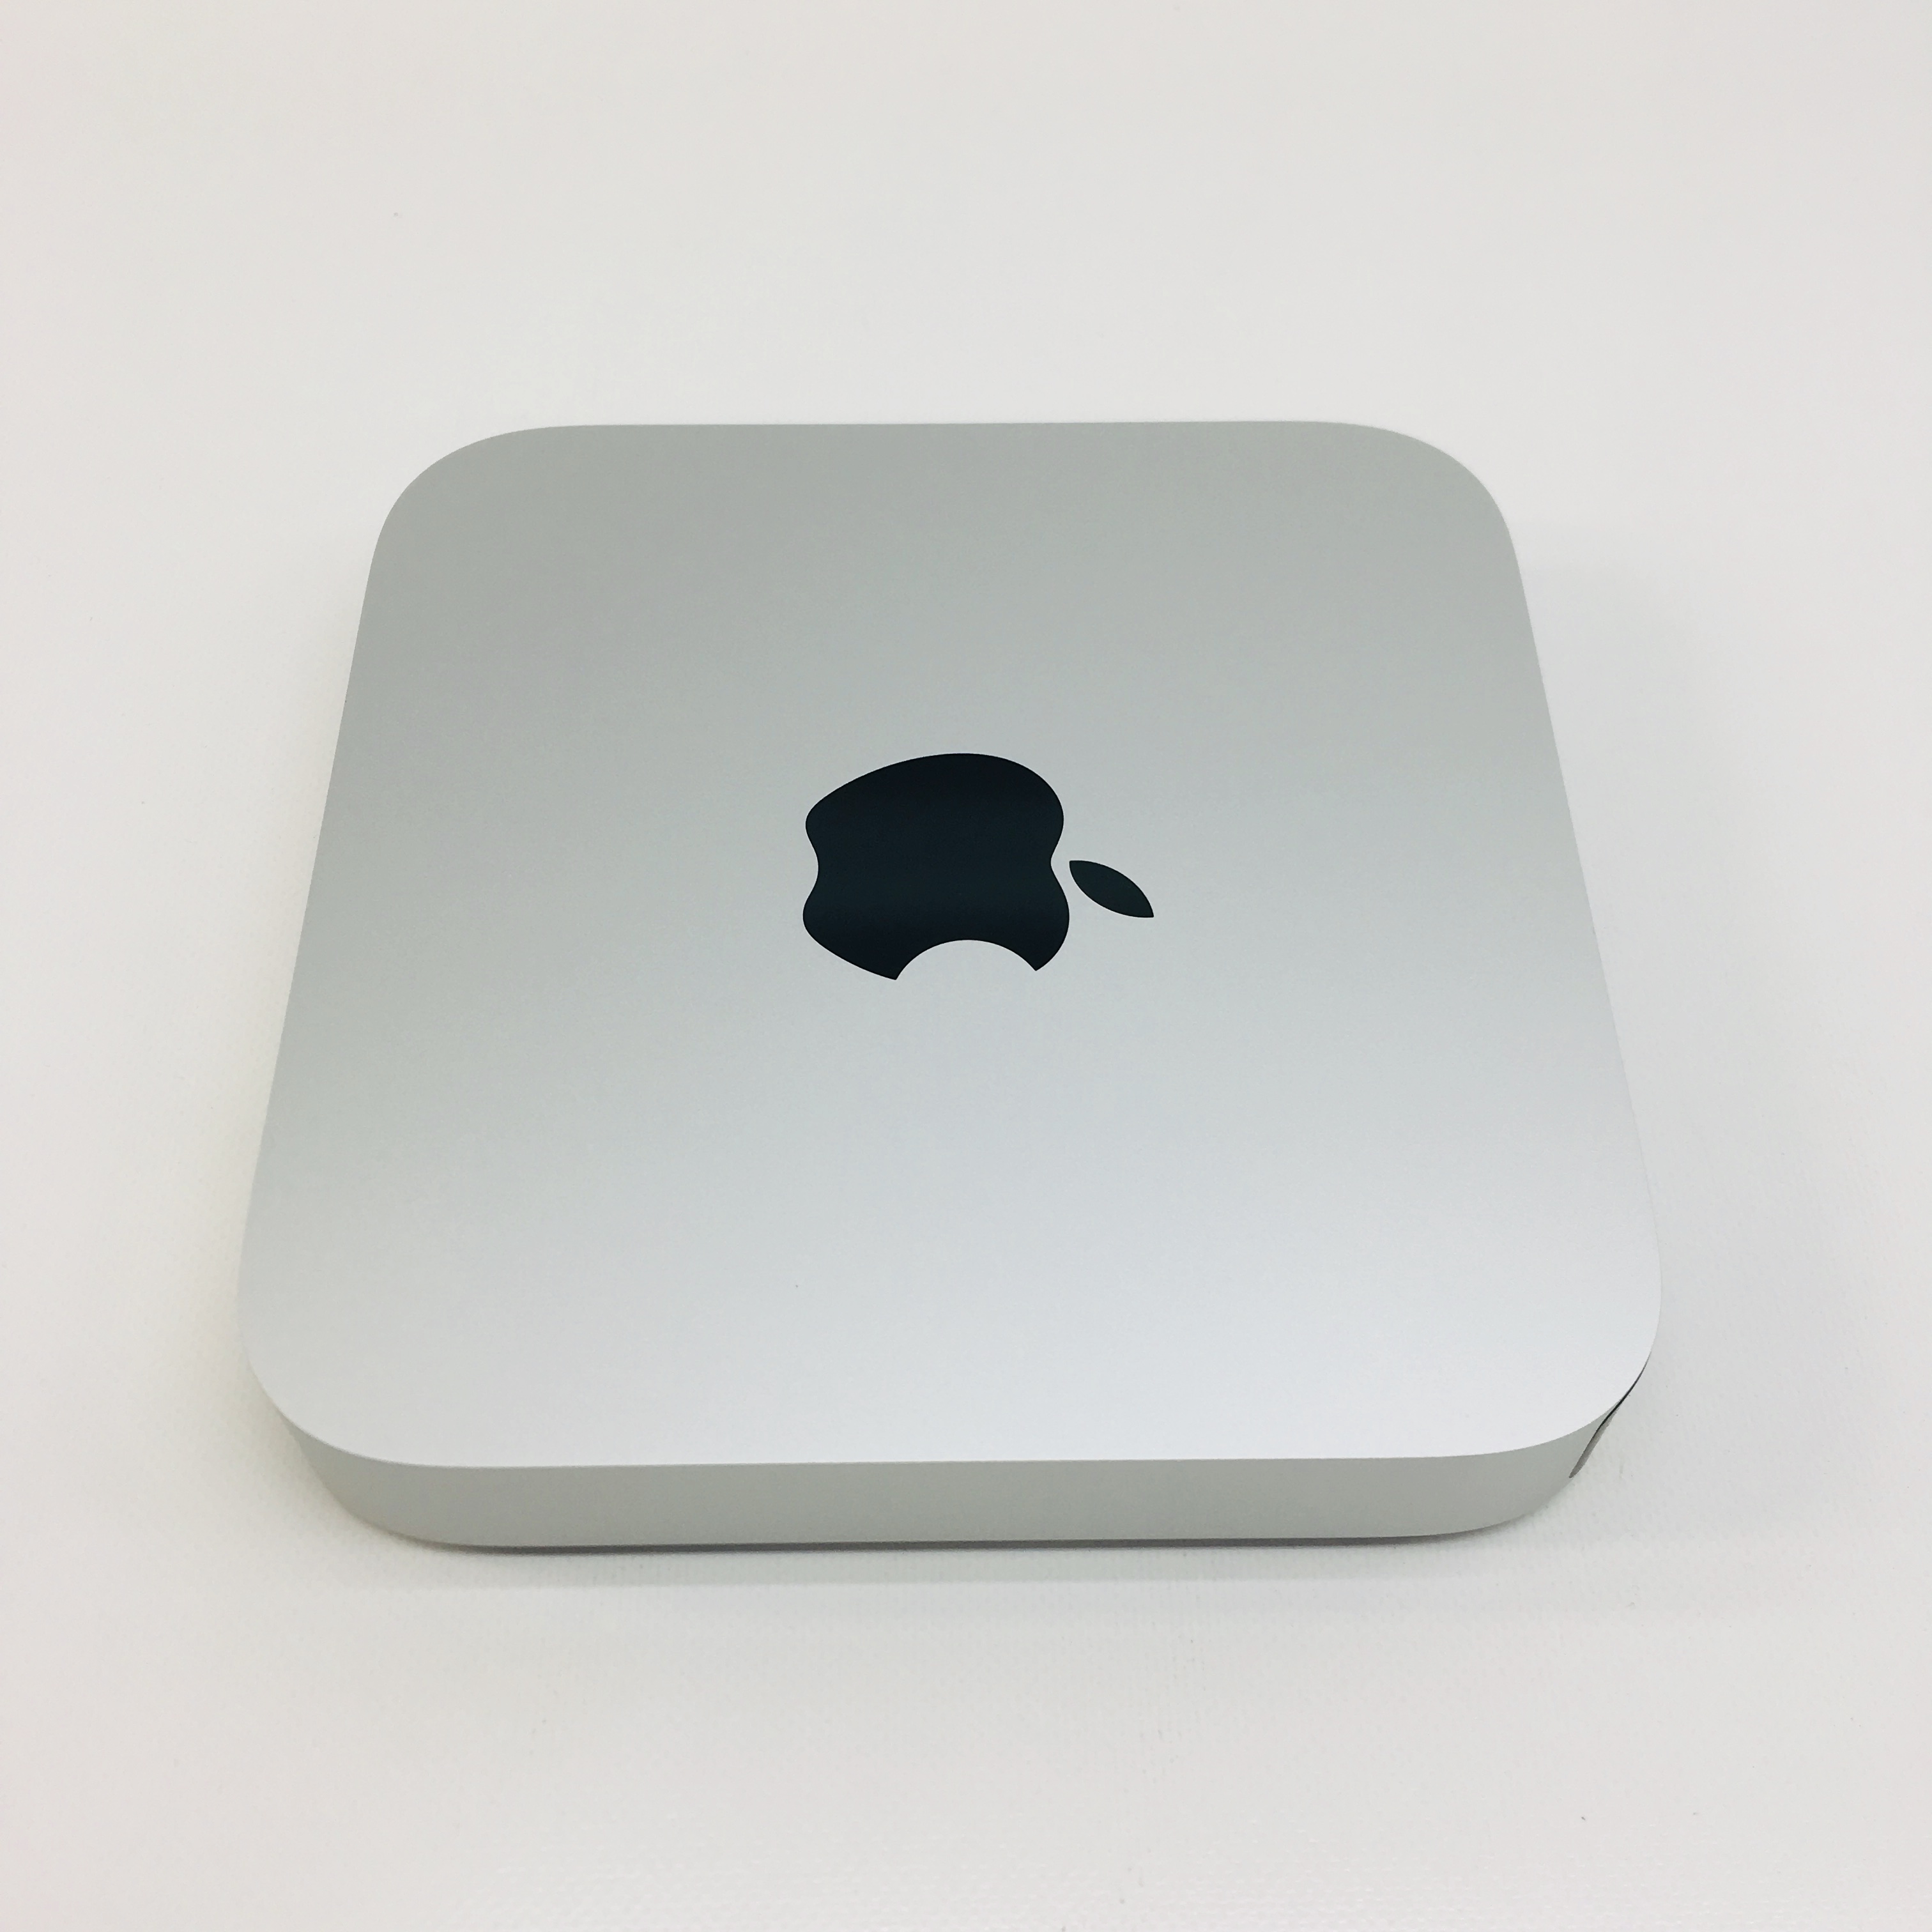 refurbished macs apple